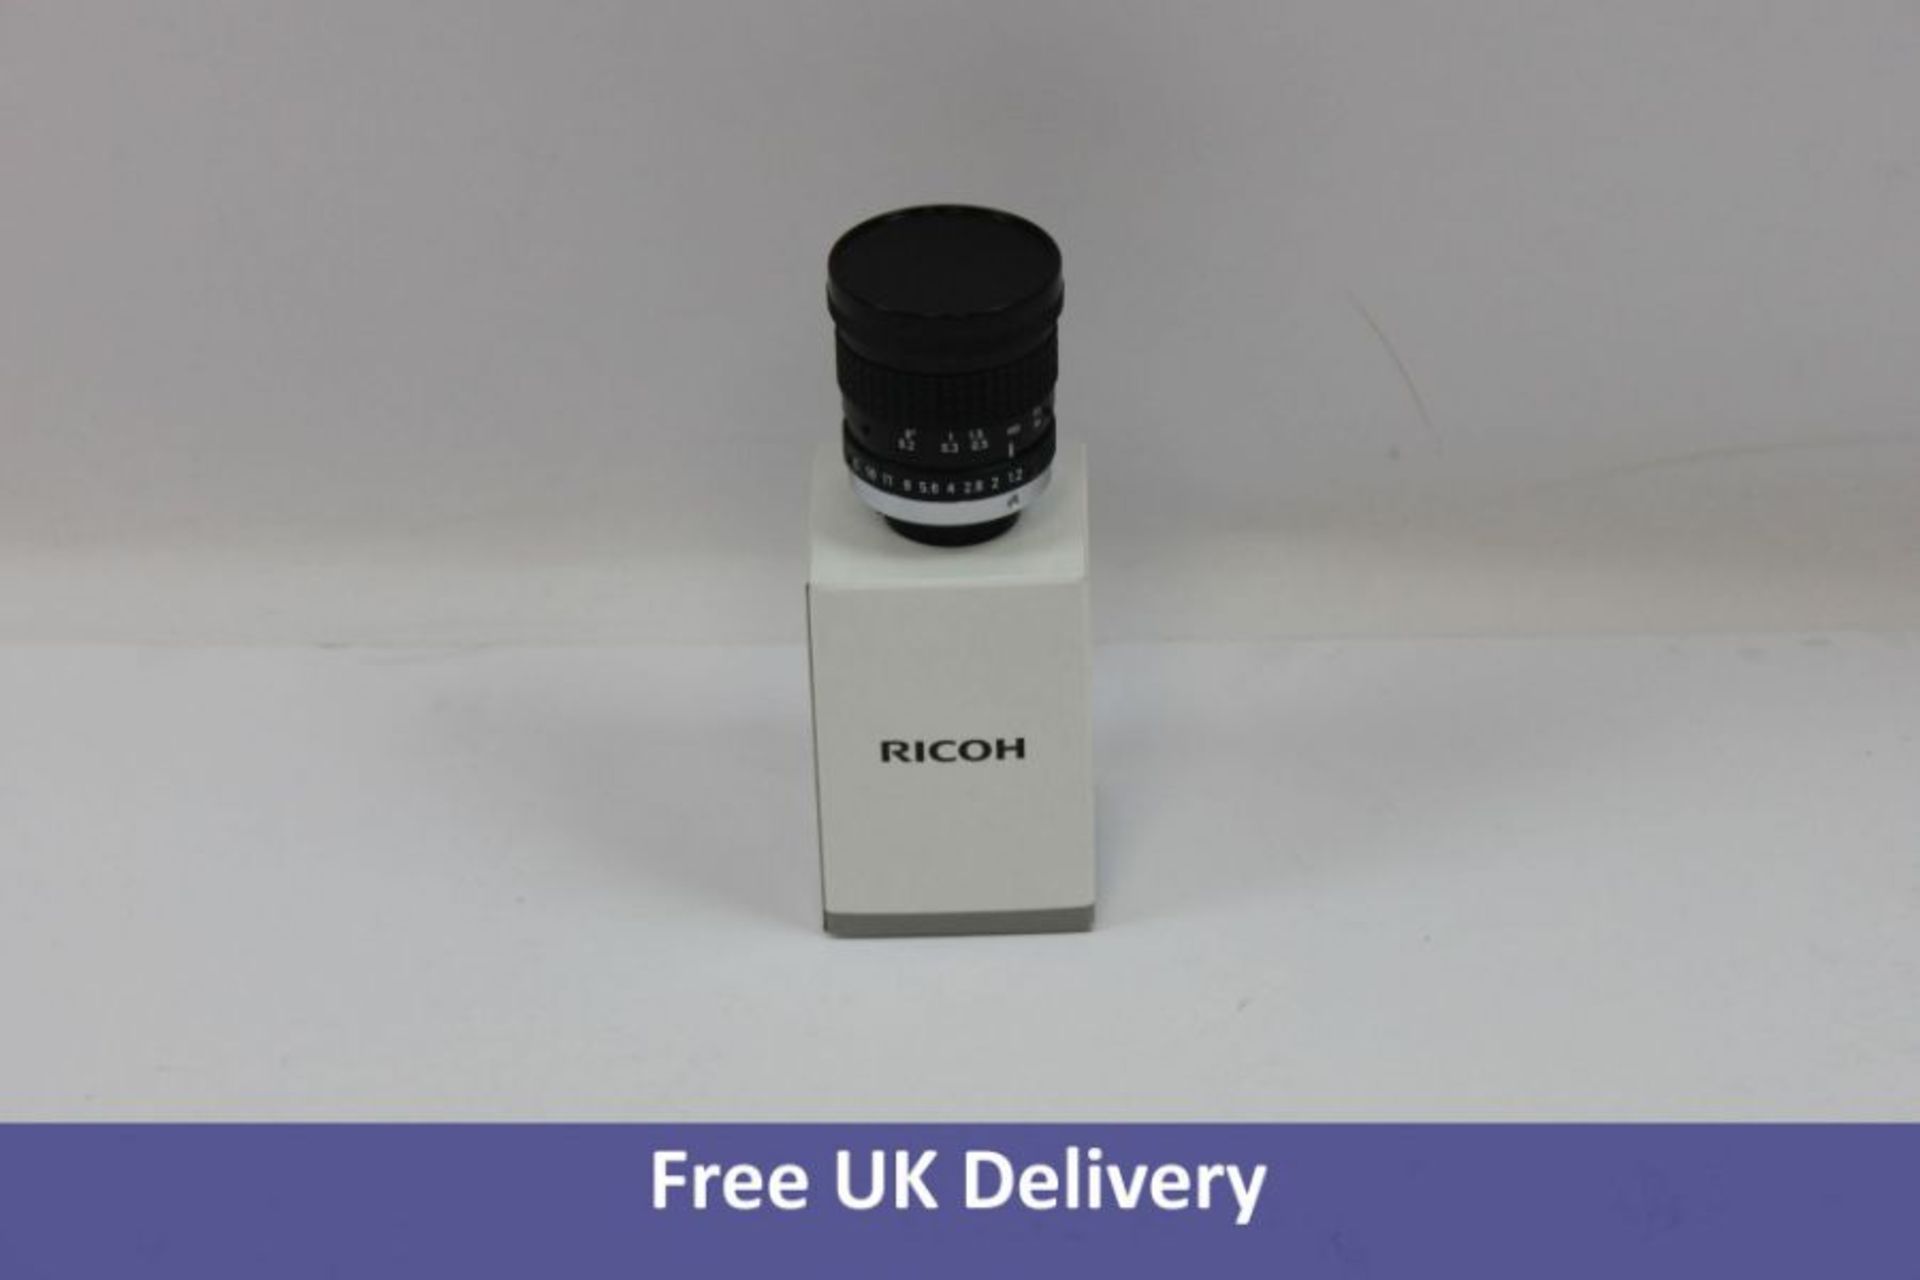 Ricoh FL-HC0612A-VG - Manual Lens 1.2 / 6mm with Locking Screws